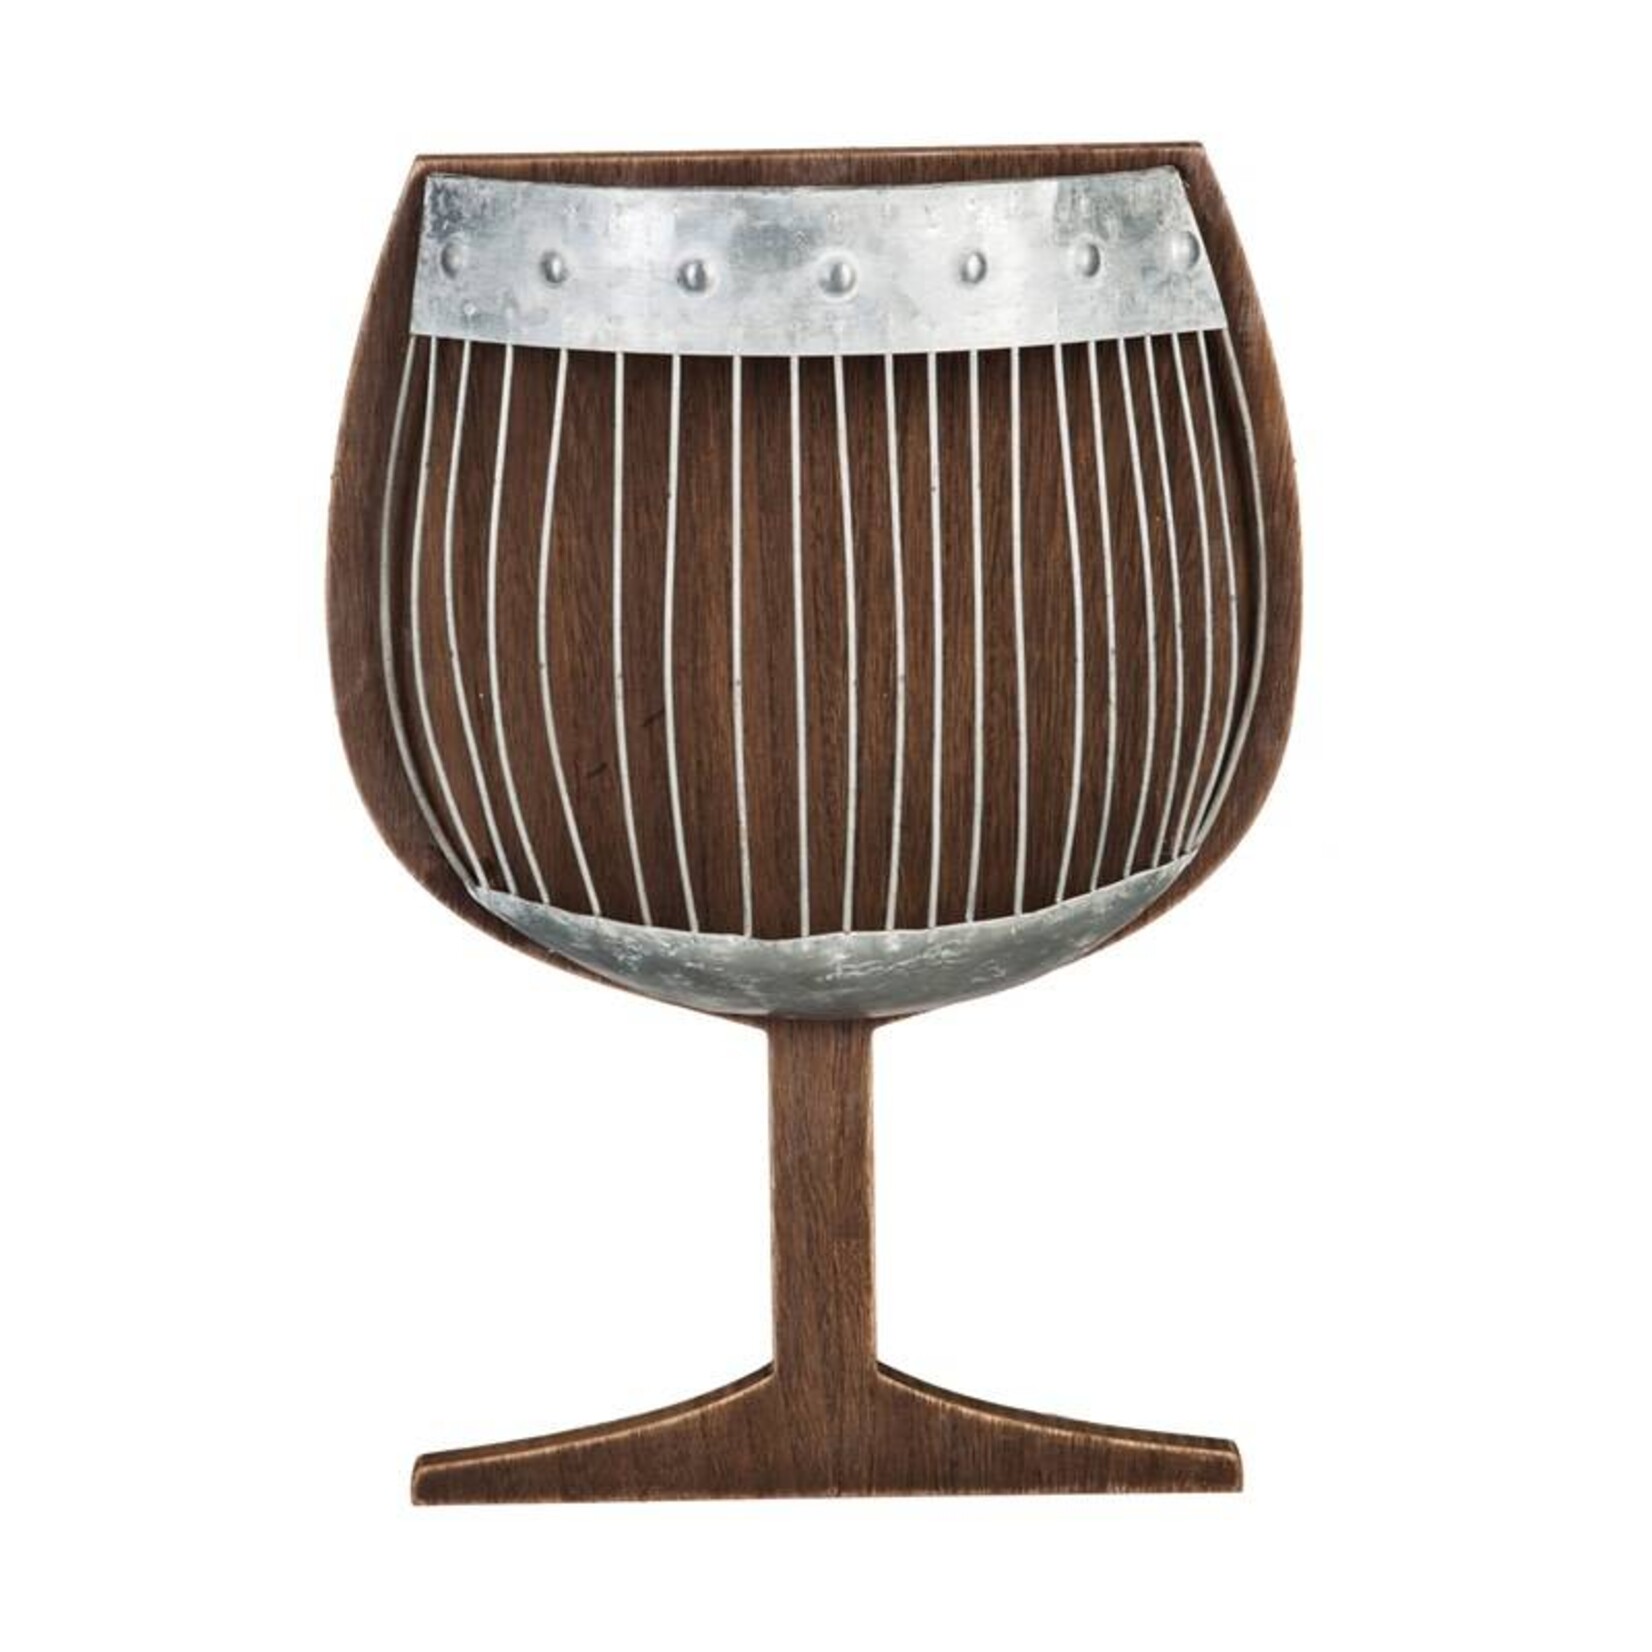 Wood and Metal Wall Cork Holder - Wine Glass